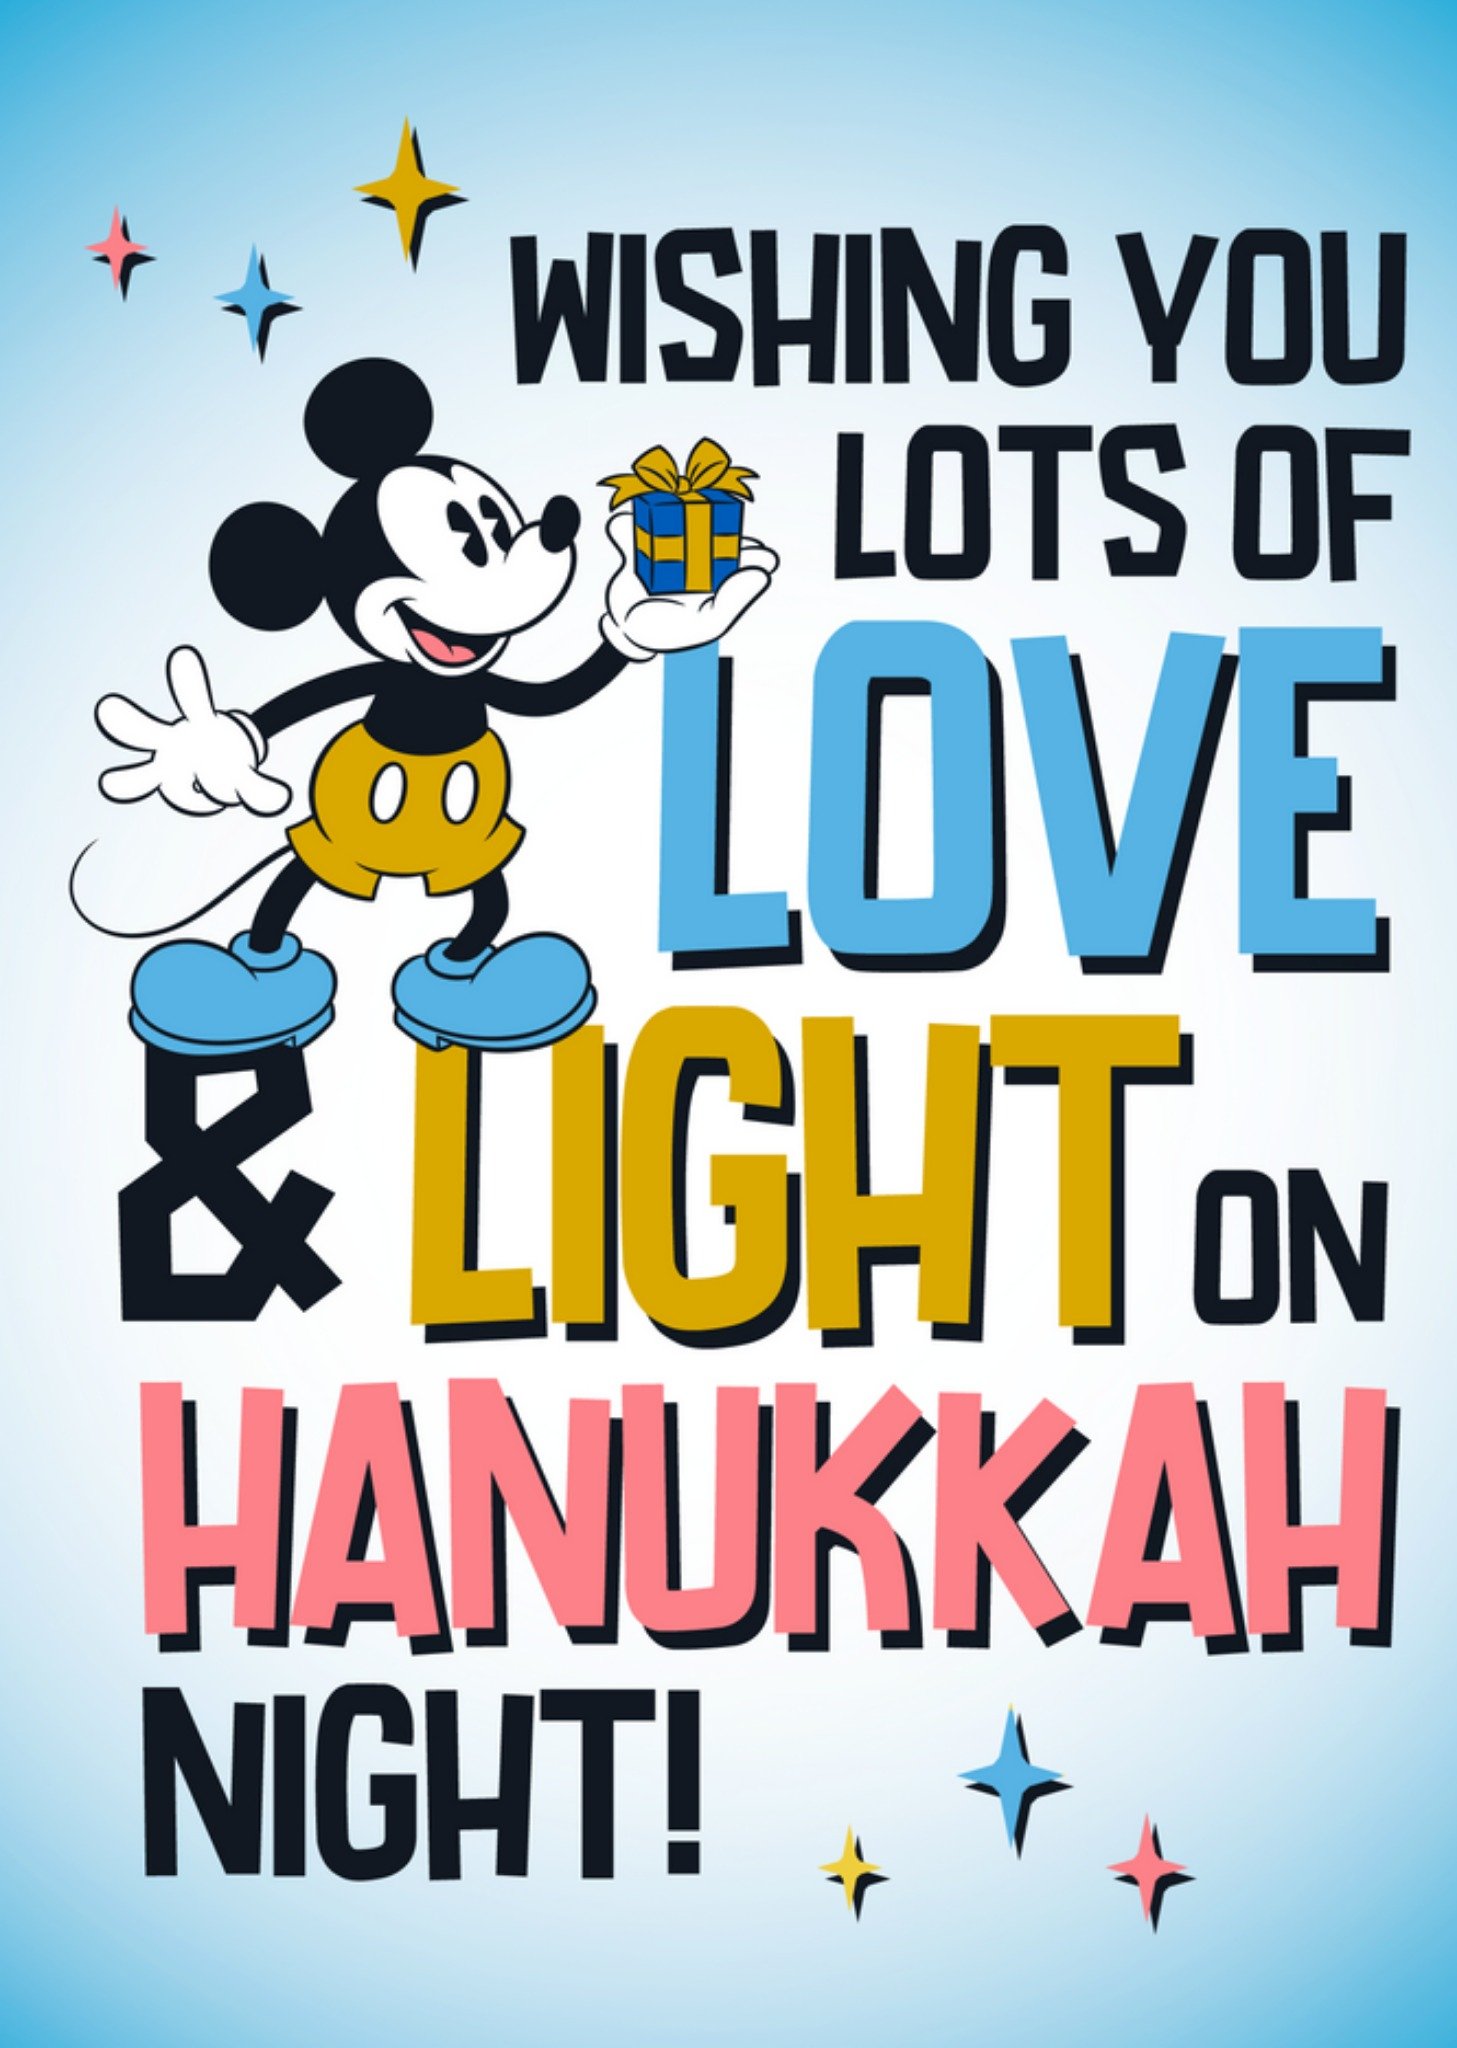 Mickey Mouse Disney Wishing You Lots Of Love & Light On Hanukkah Night Card Ecard